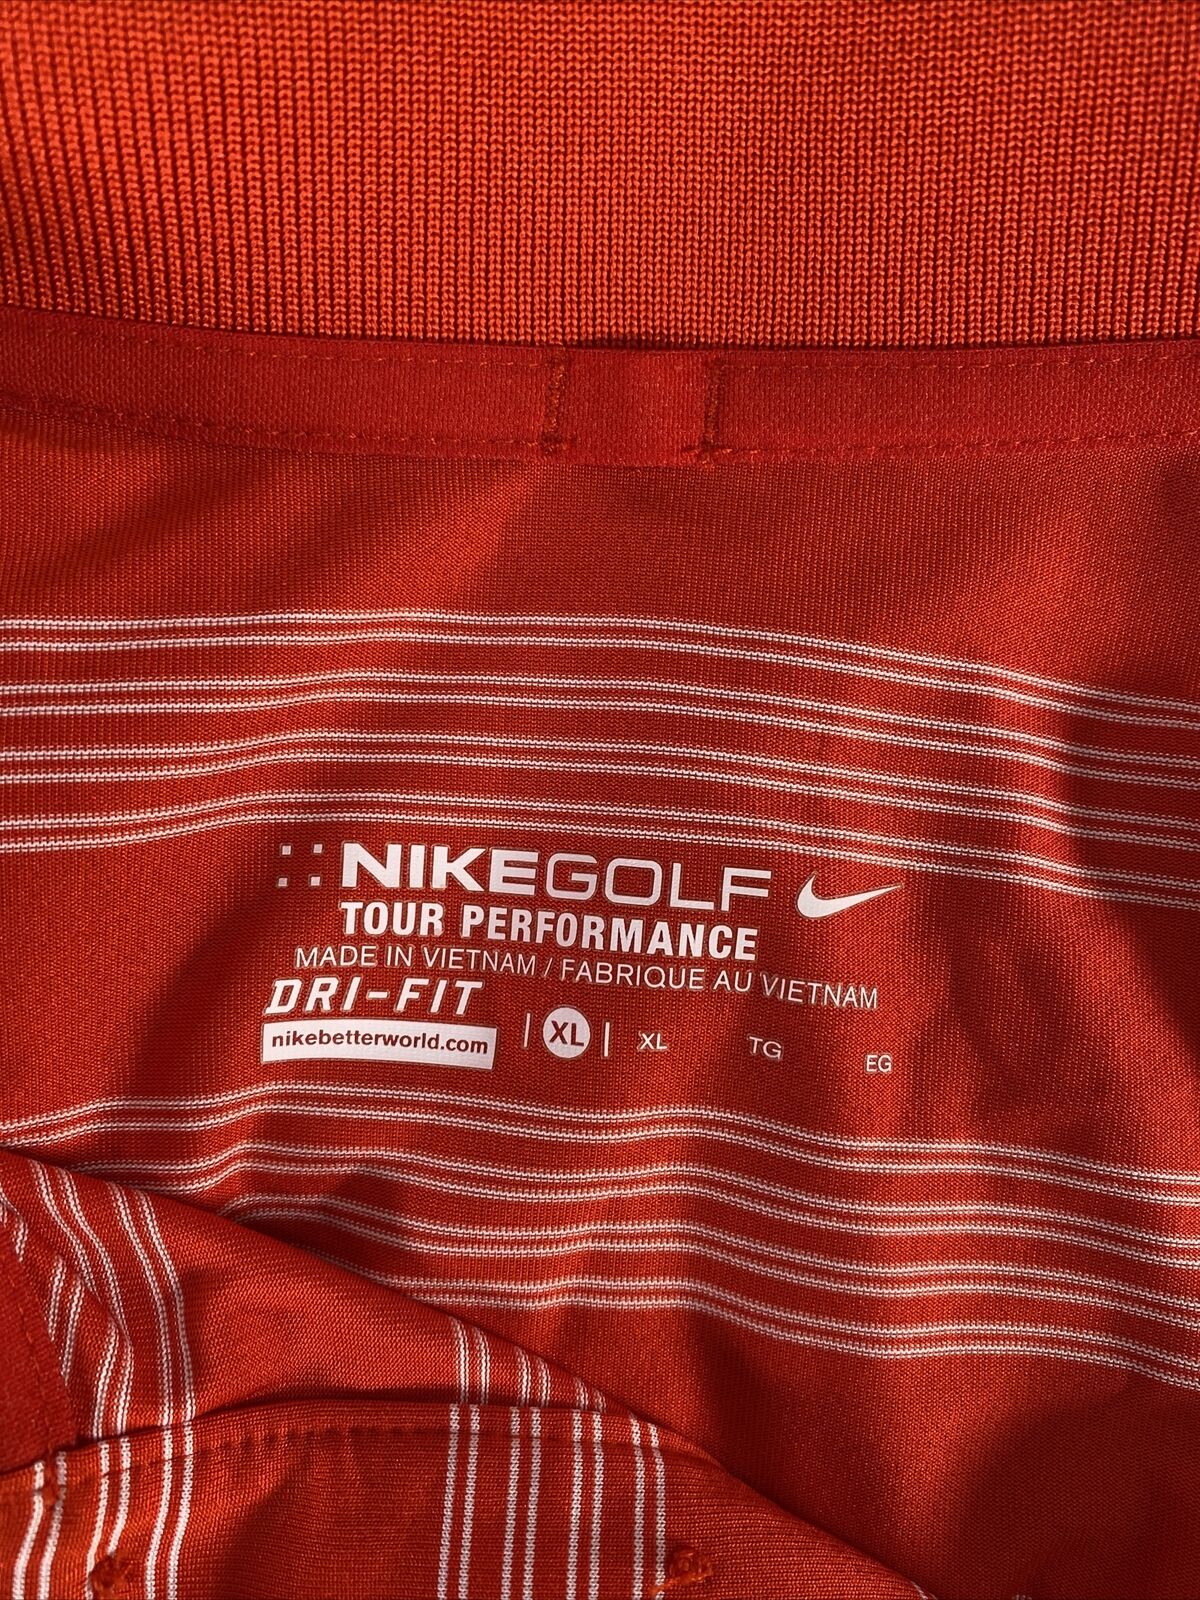 Nike Men's Red Striped Short Sleeve Dri-Fit Golf Polo Shirt - XL